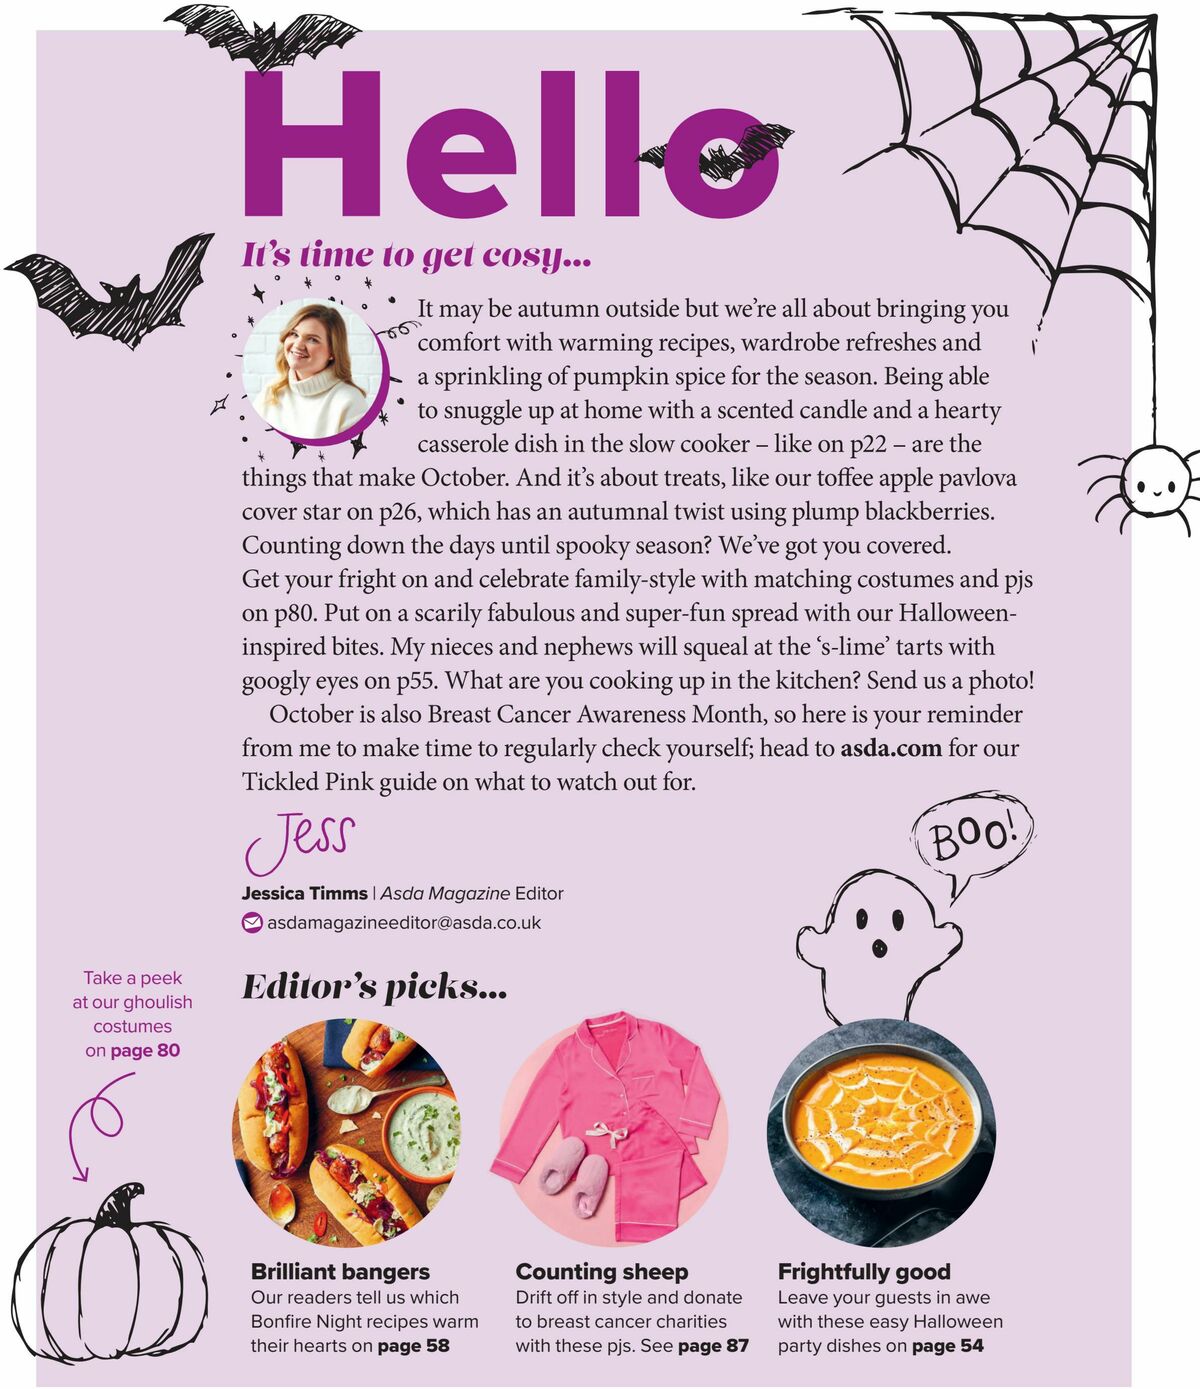 ASDA Magazine October Offers from 1 October